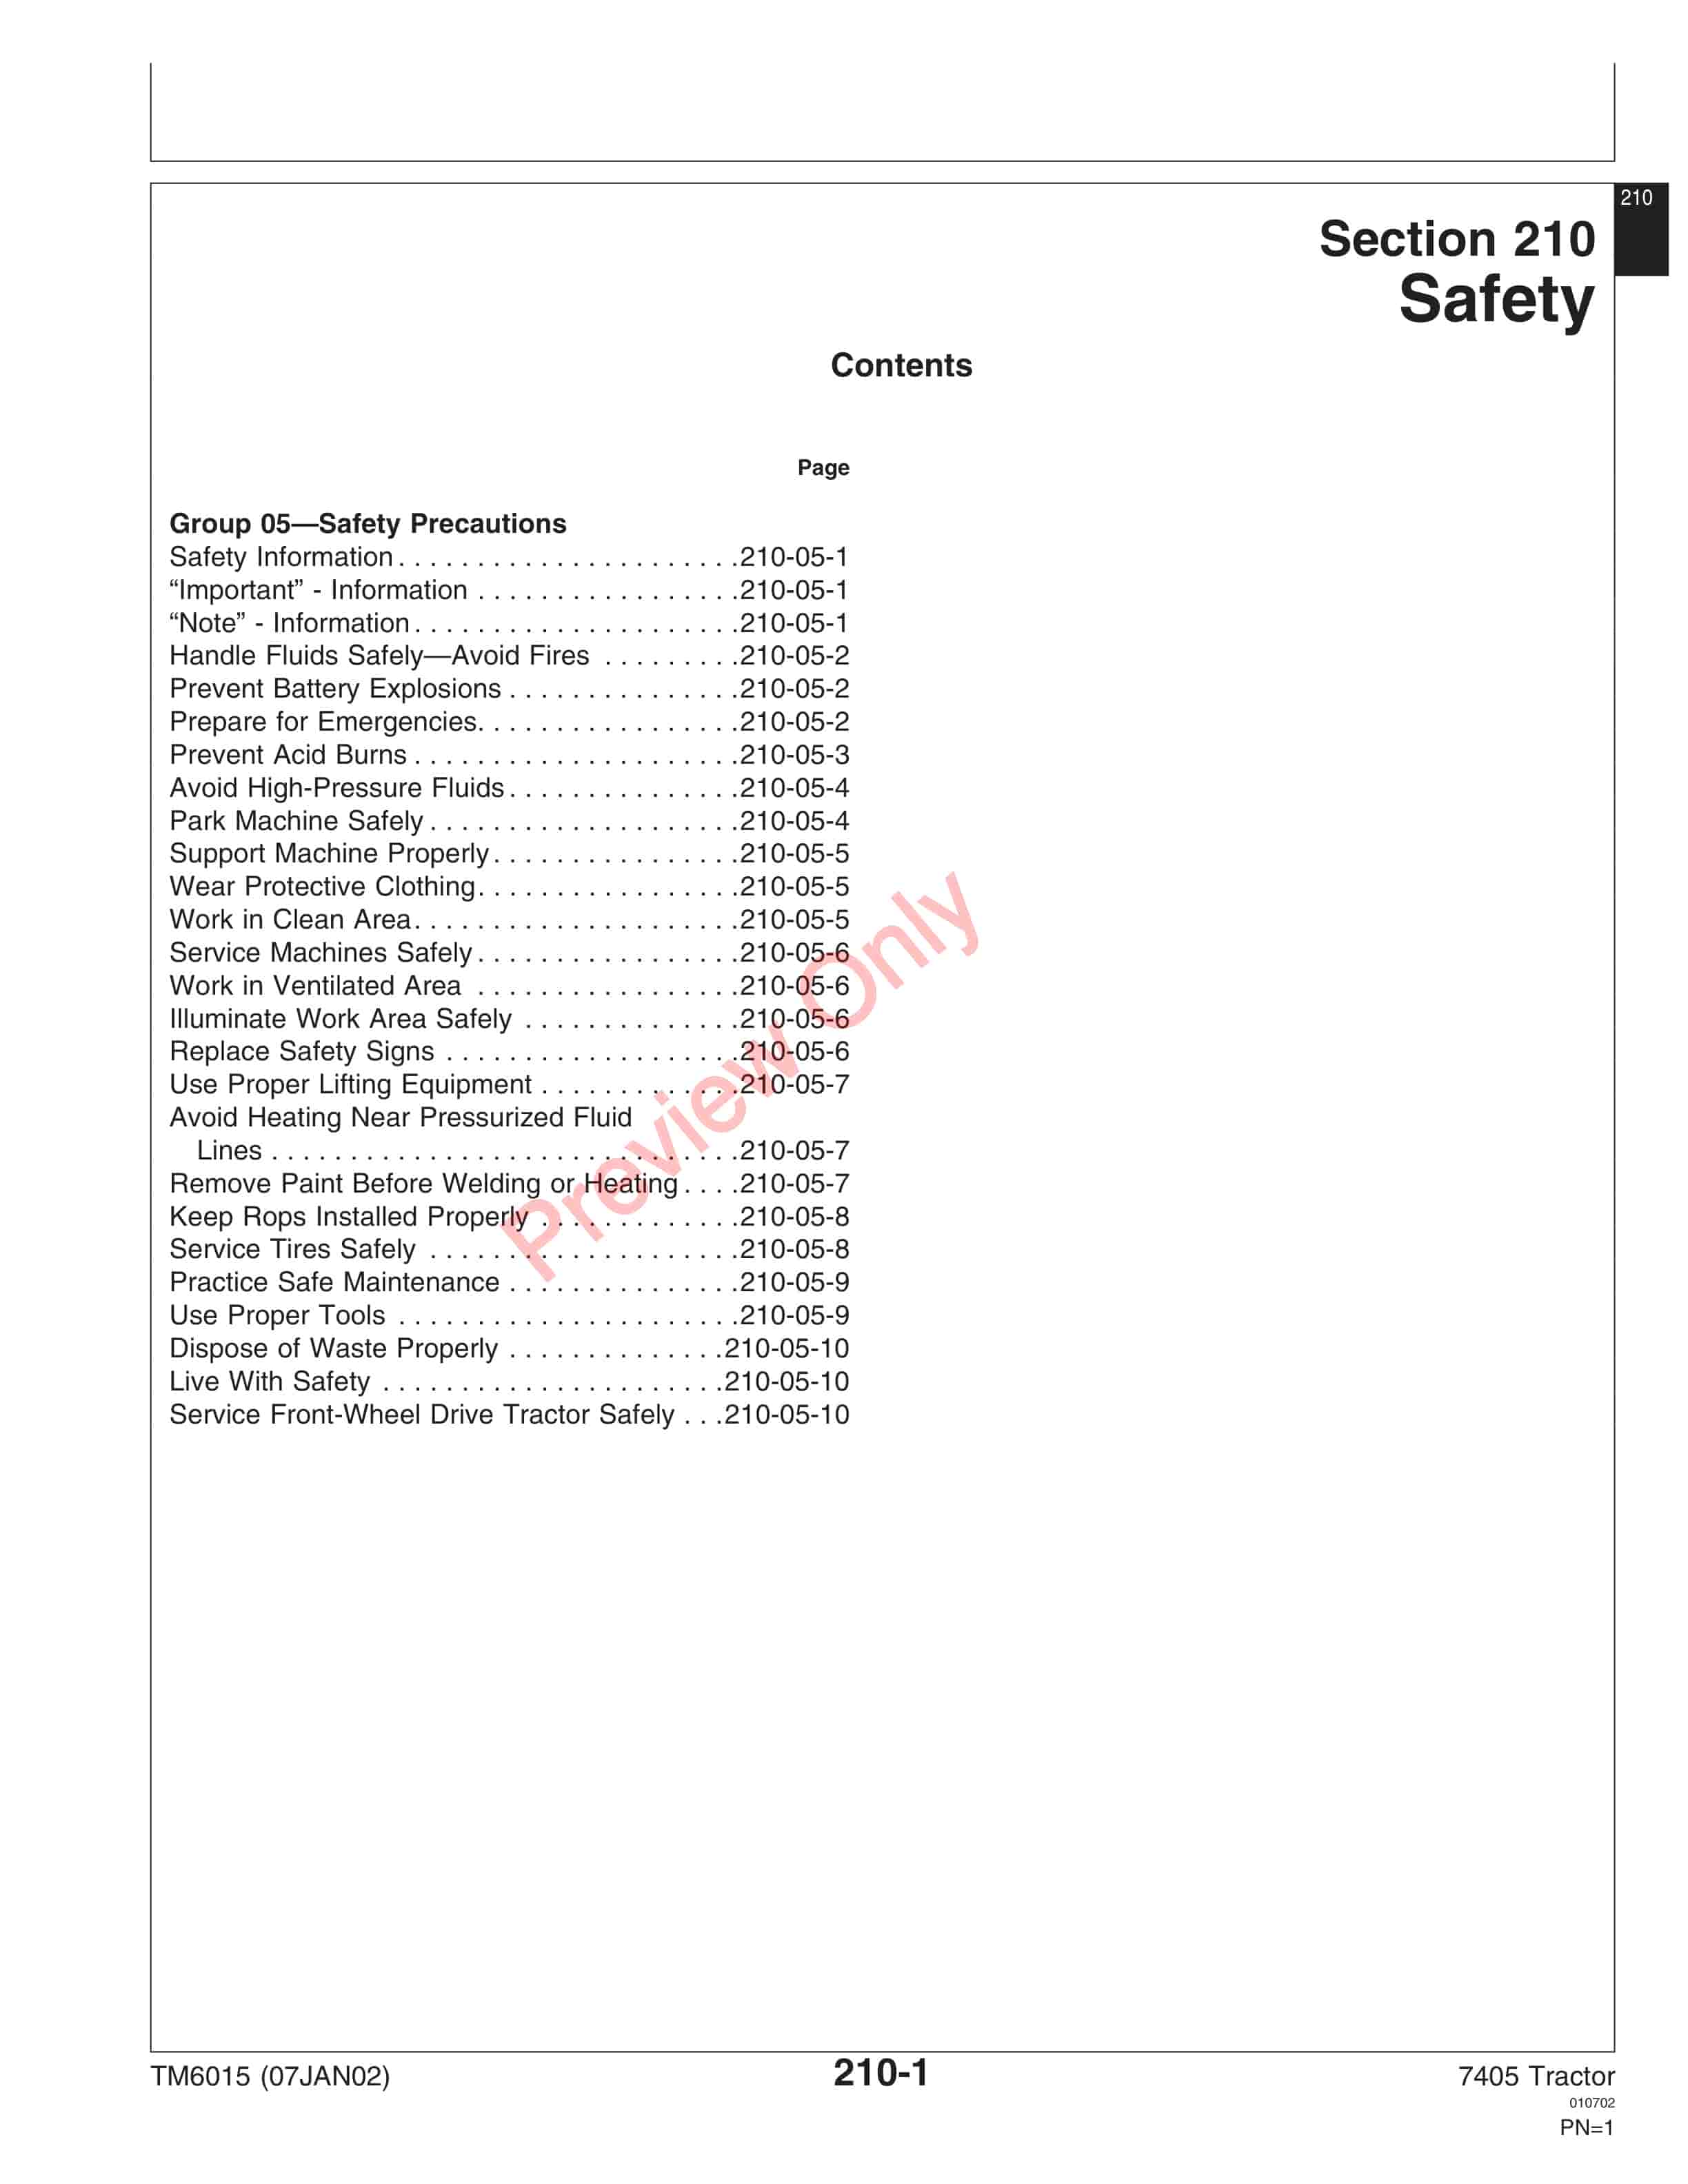 John Deere 7405 Tractor Technical Manual TM6015 07JAN02 5